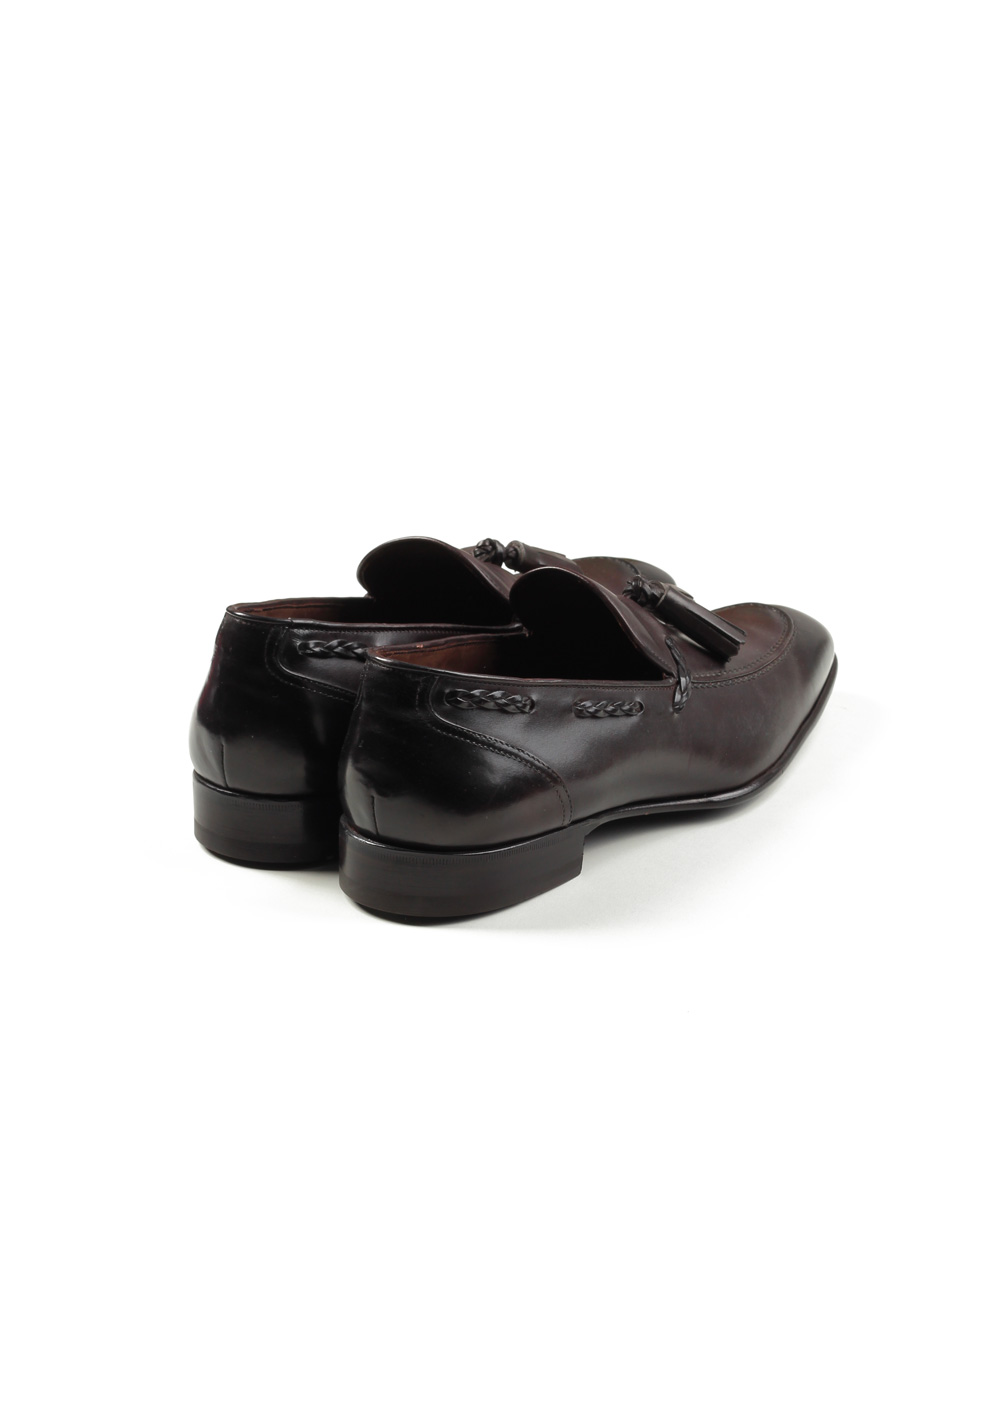 TOM FORD Adney Tassel Loafers Shoes Size 8.5T Uk / 9.5T U.S. | Costume Limité